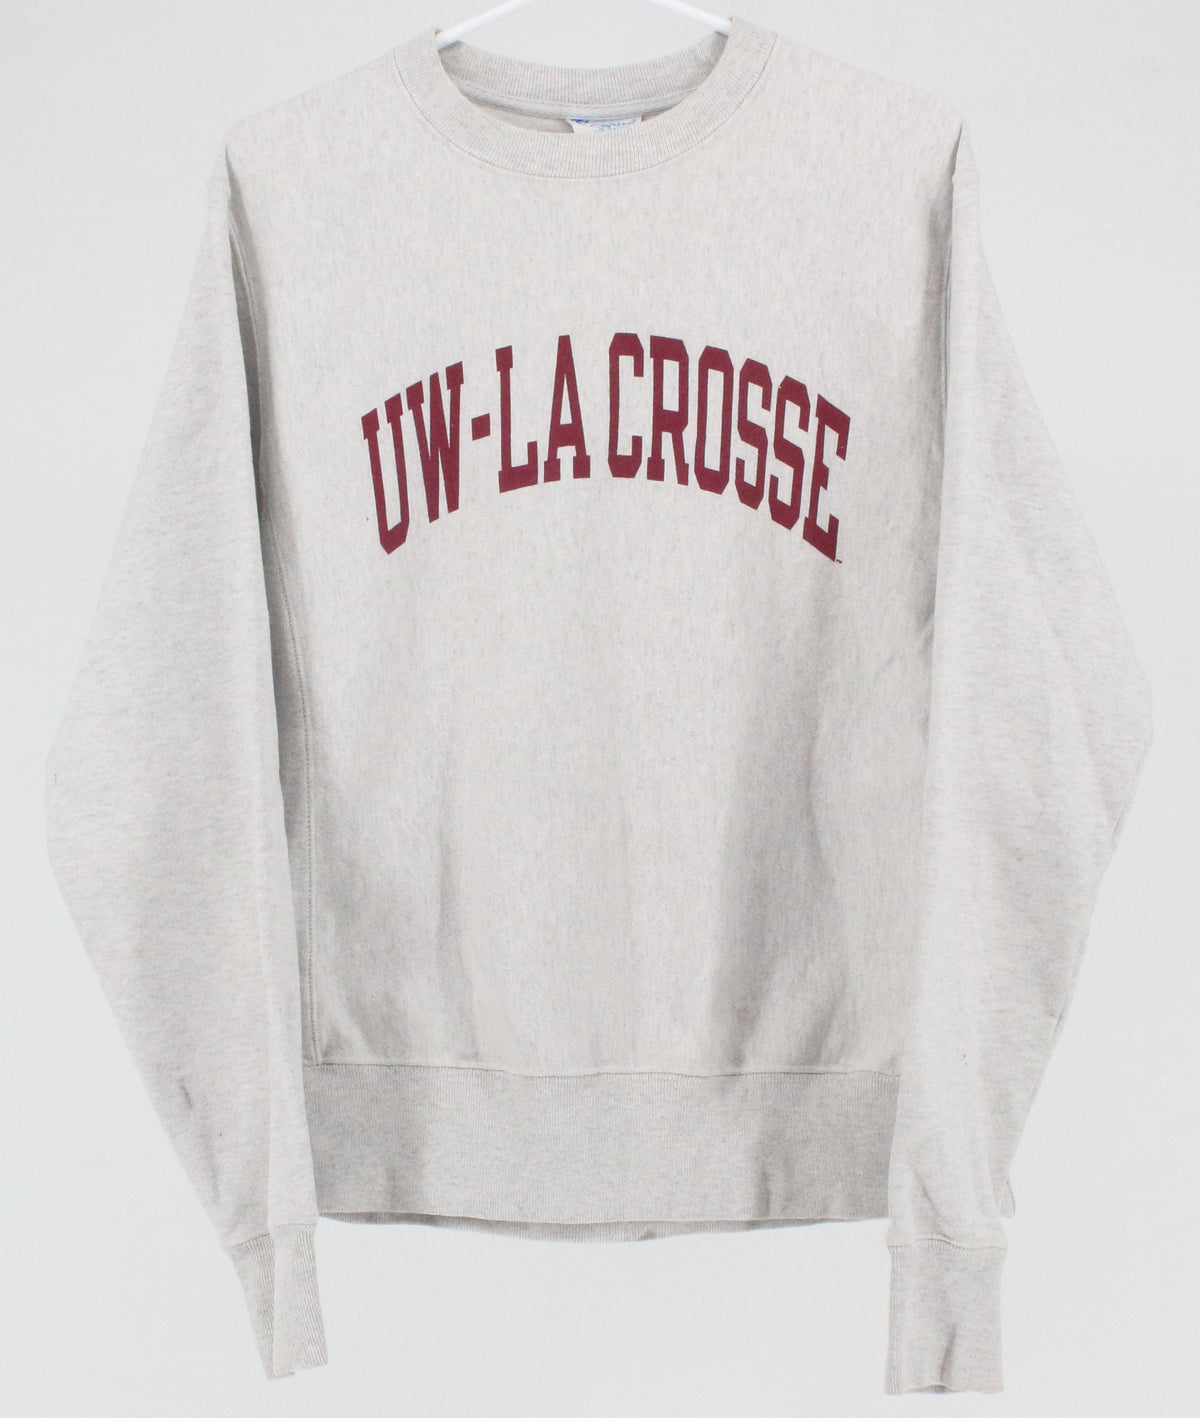 Champion Reverse Weave UW Lacrosse Graphic Grey Sweatshirt